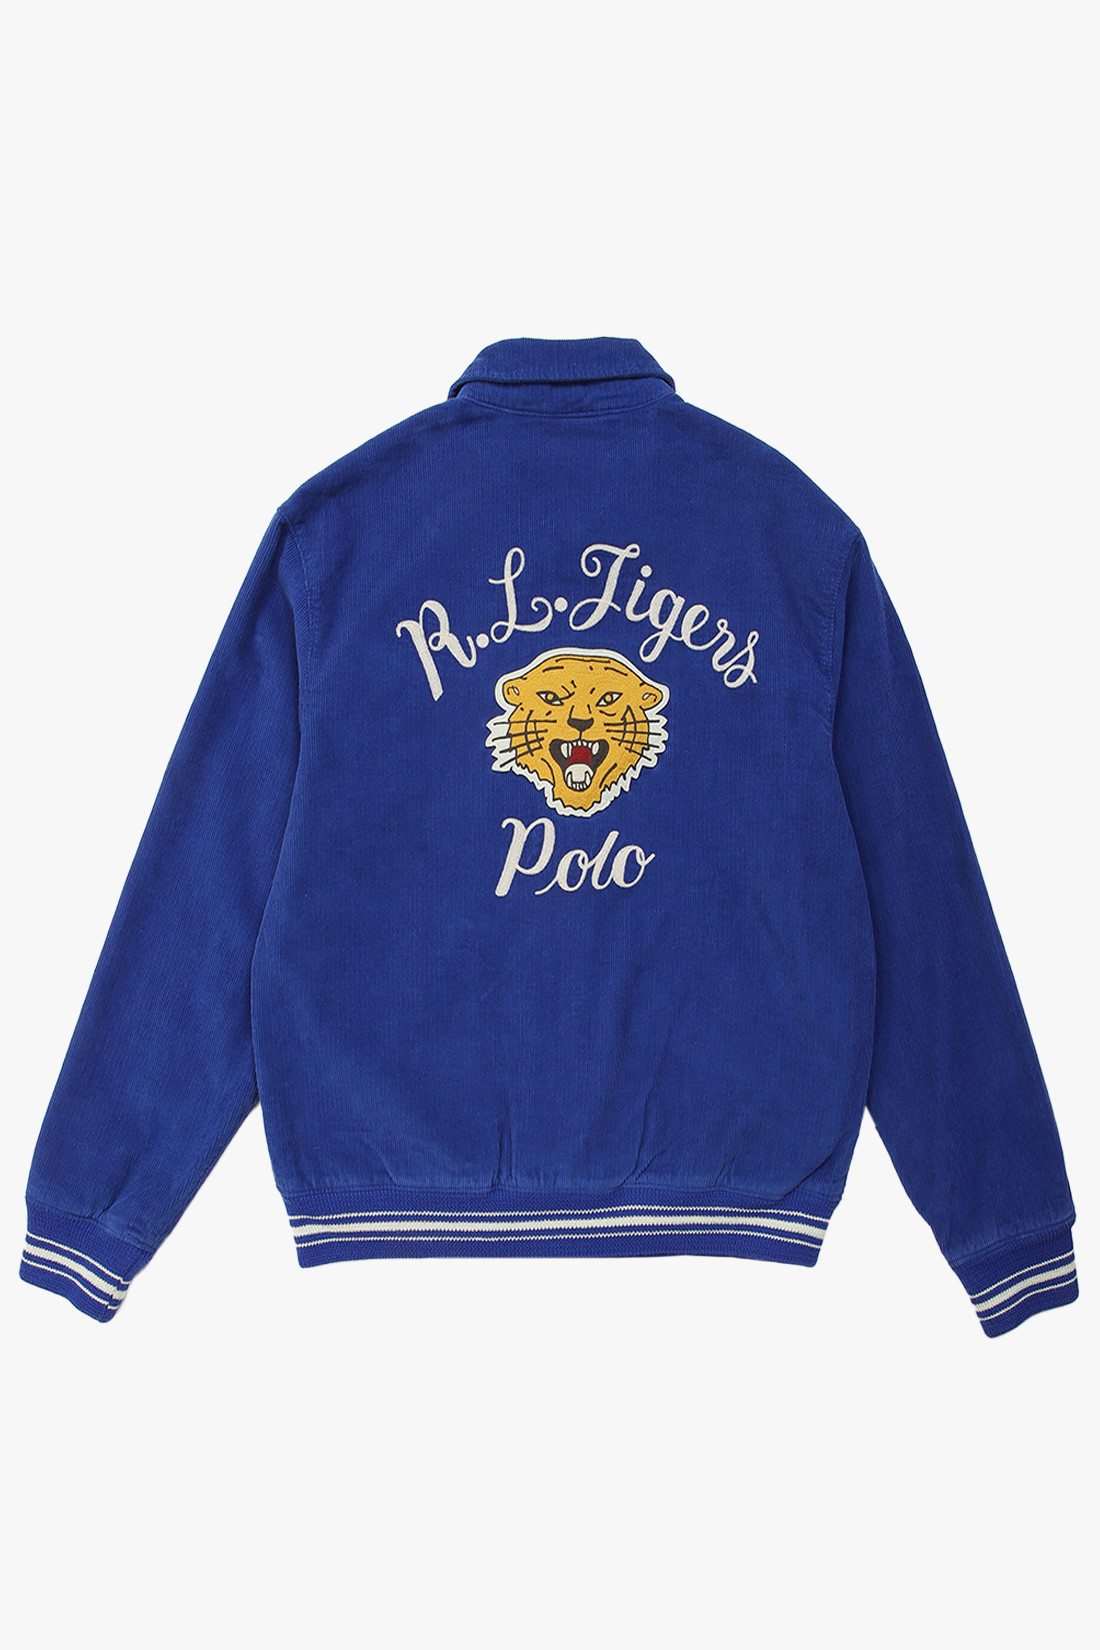 Polo Ralph Lauren Varsity Tiger Lined Jacket Heritage Royal | sites ...